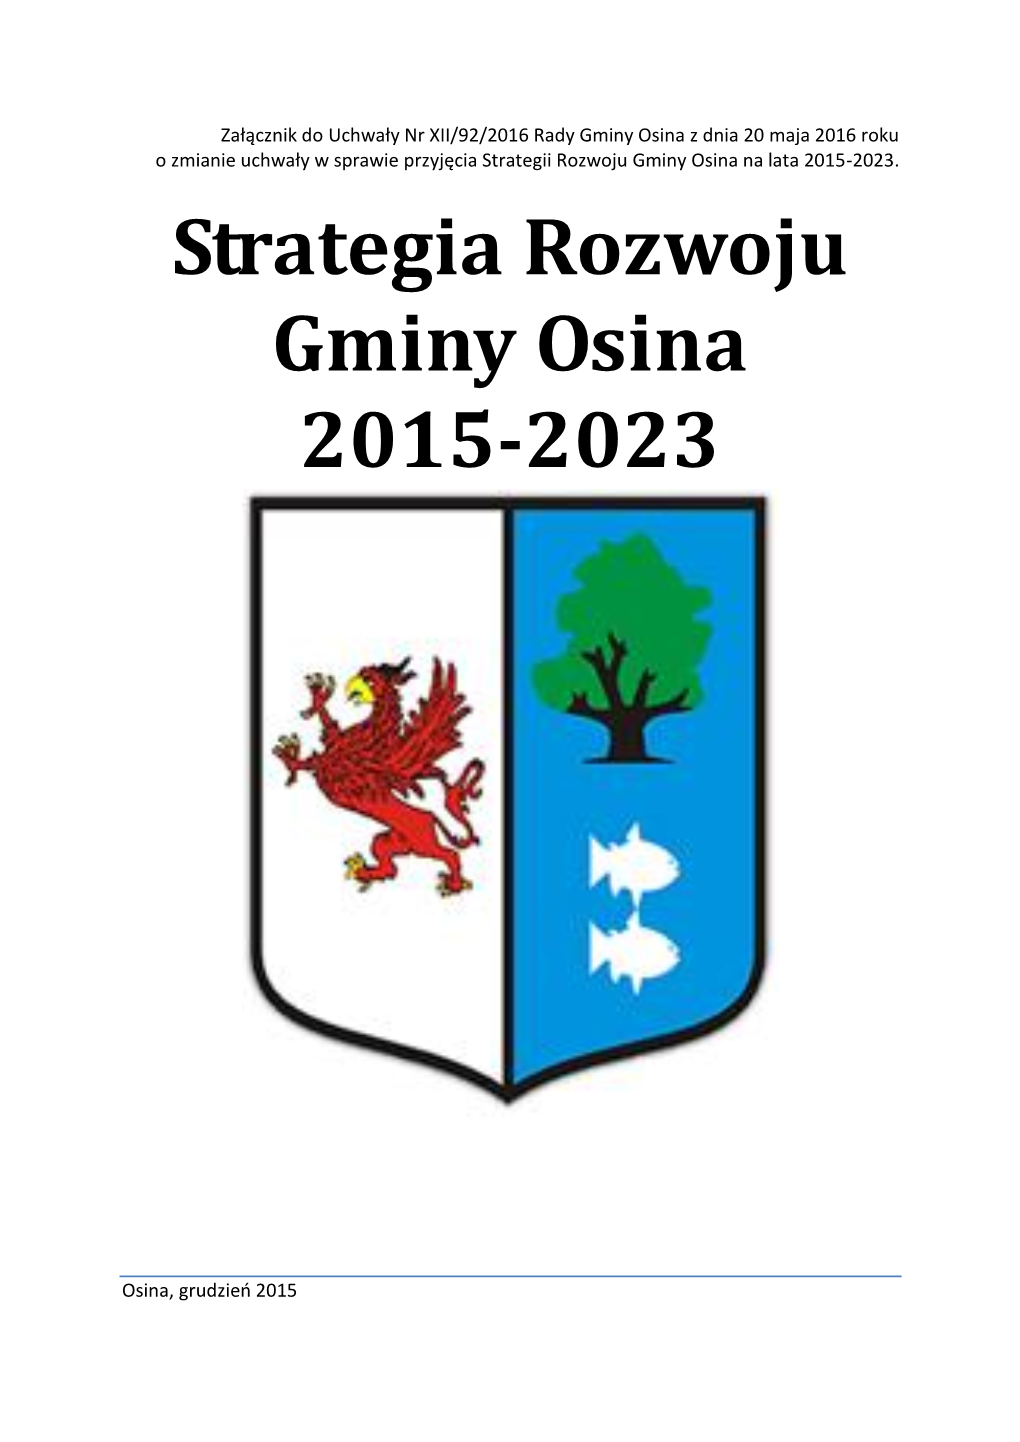 Strategia Rozwoju Gminy Osina 2015-2023